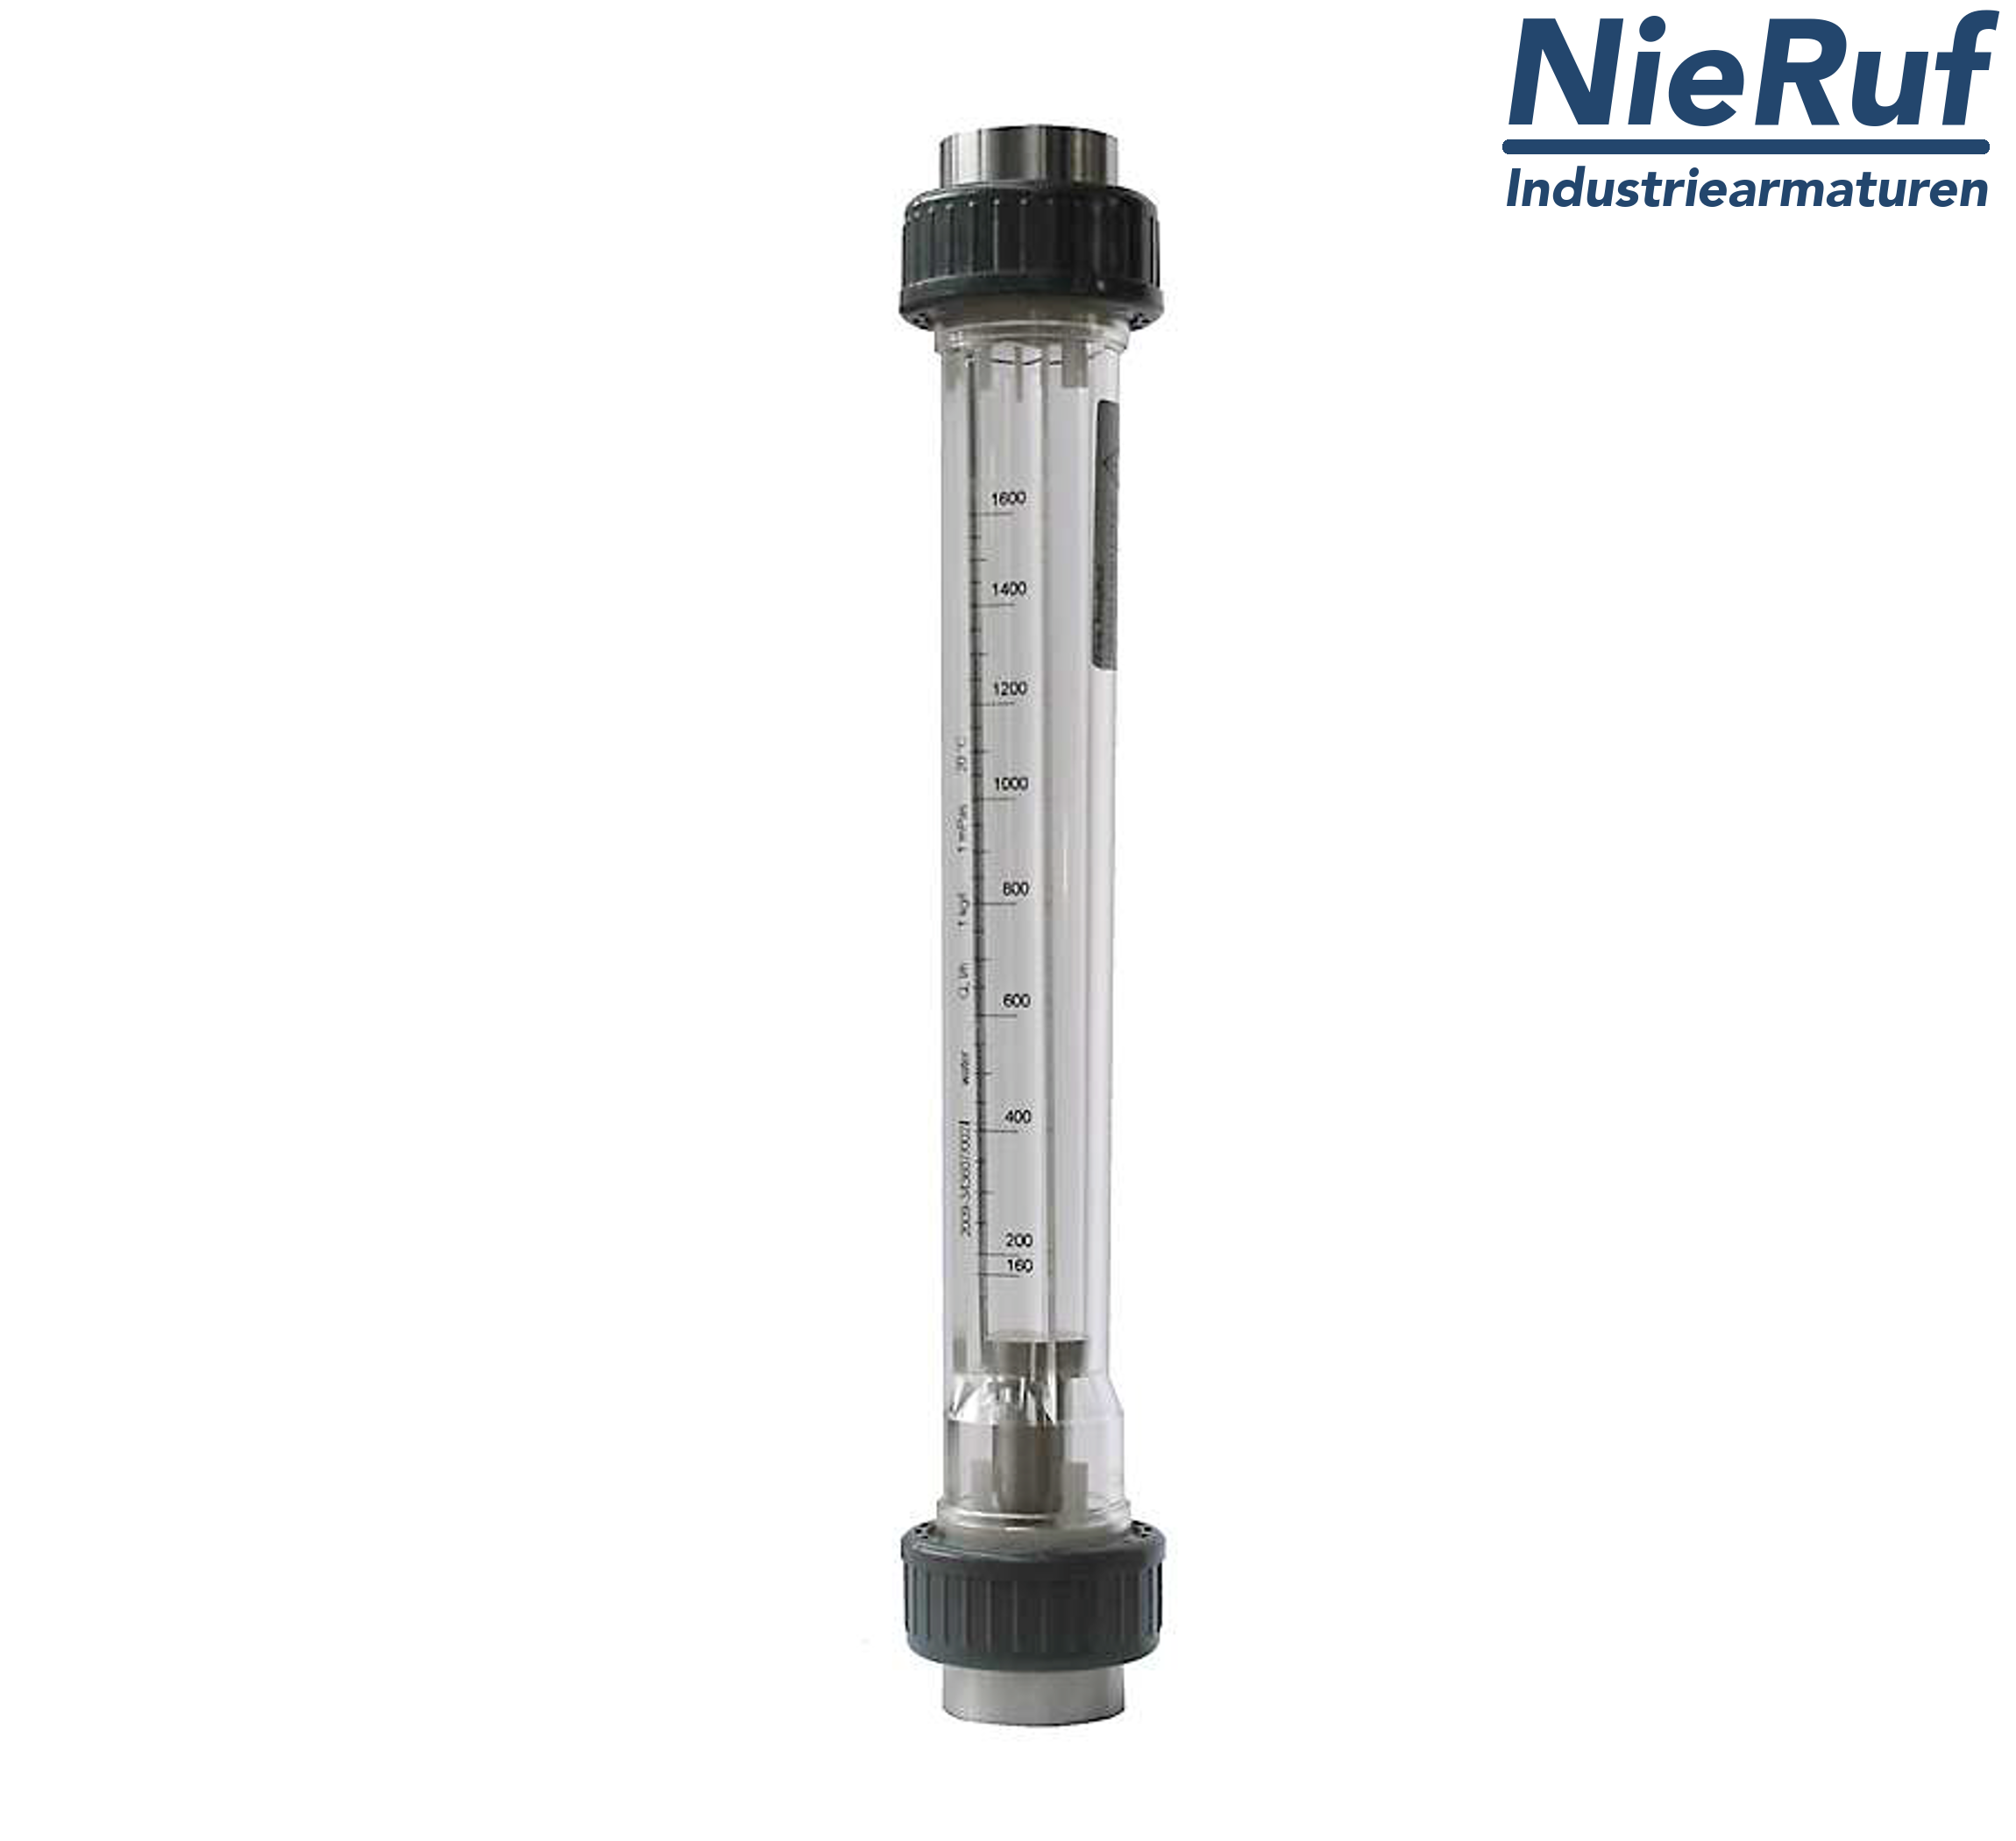 Variable area flowmeter 3/4" inch NPT 160.0 - 1600 l/h water FKM